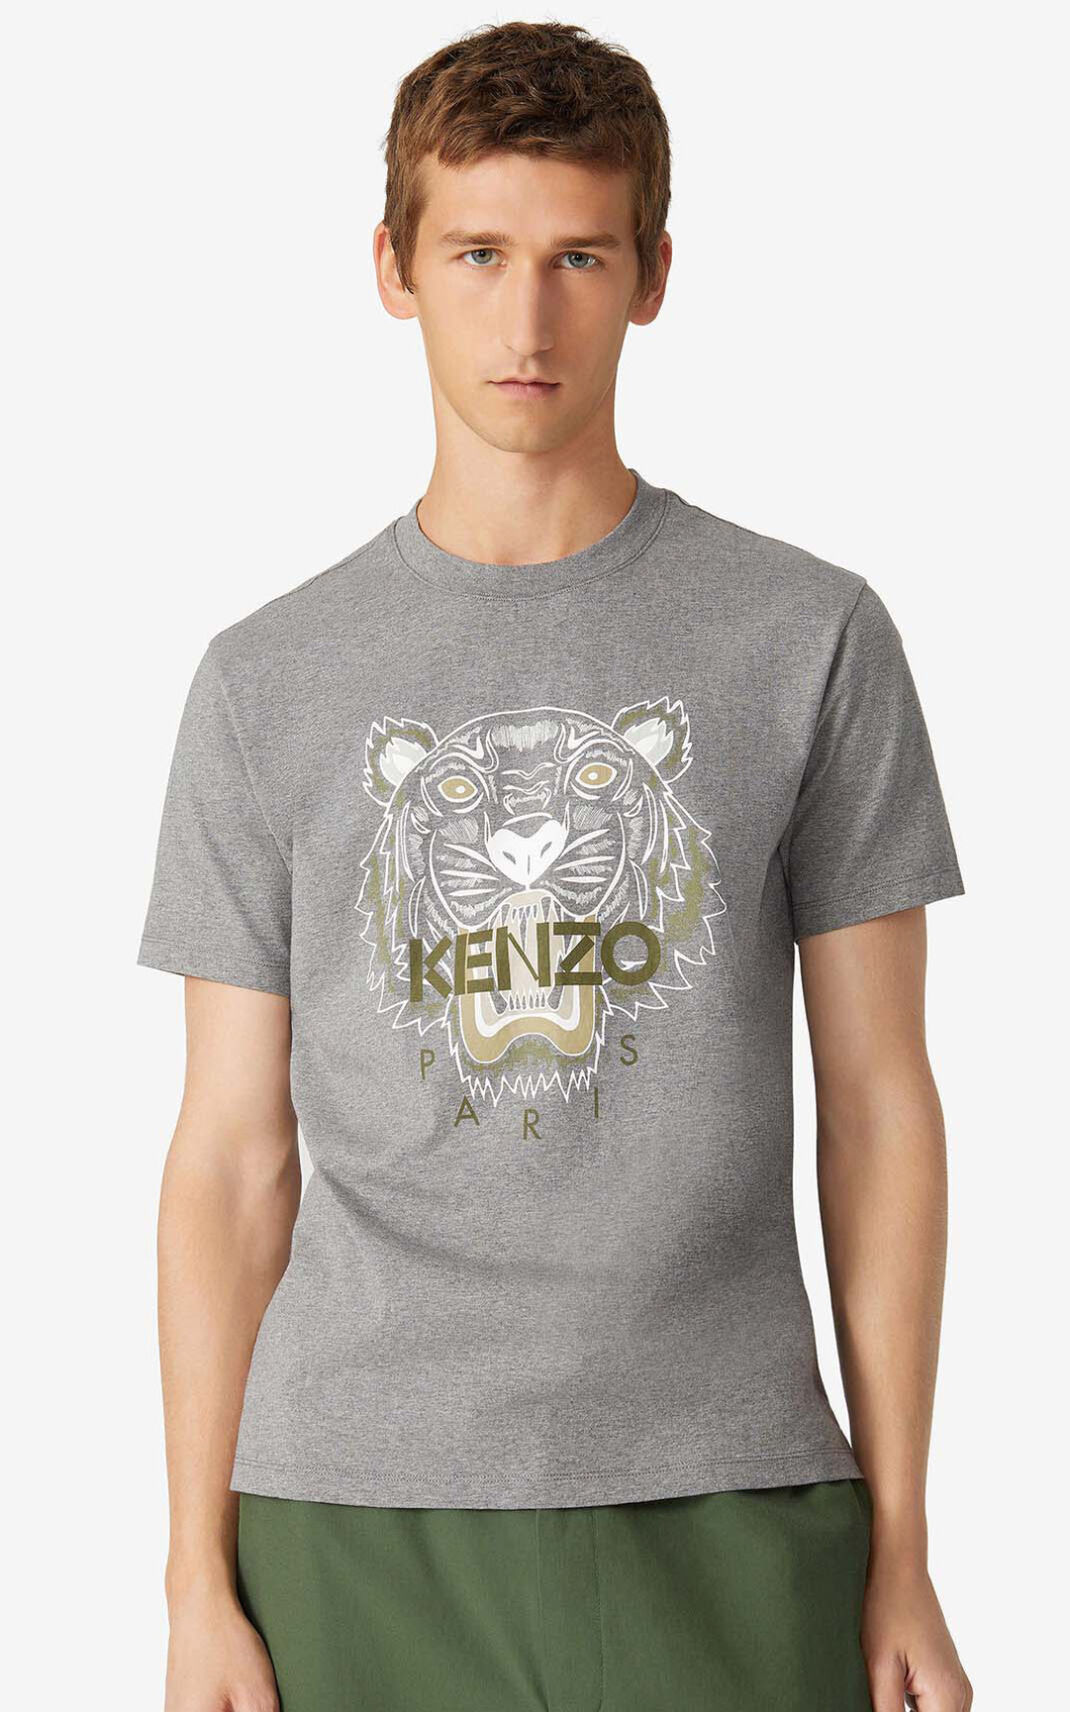 Kenzo 虎 Tシャツ メンズ グレー - KOTCFZ176